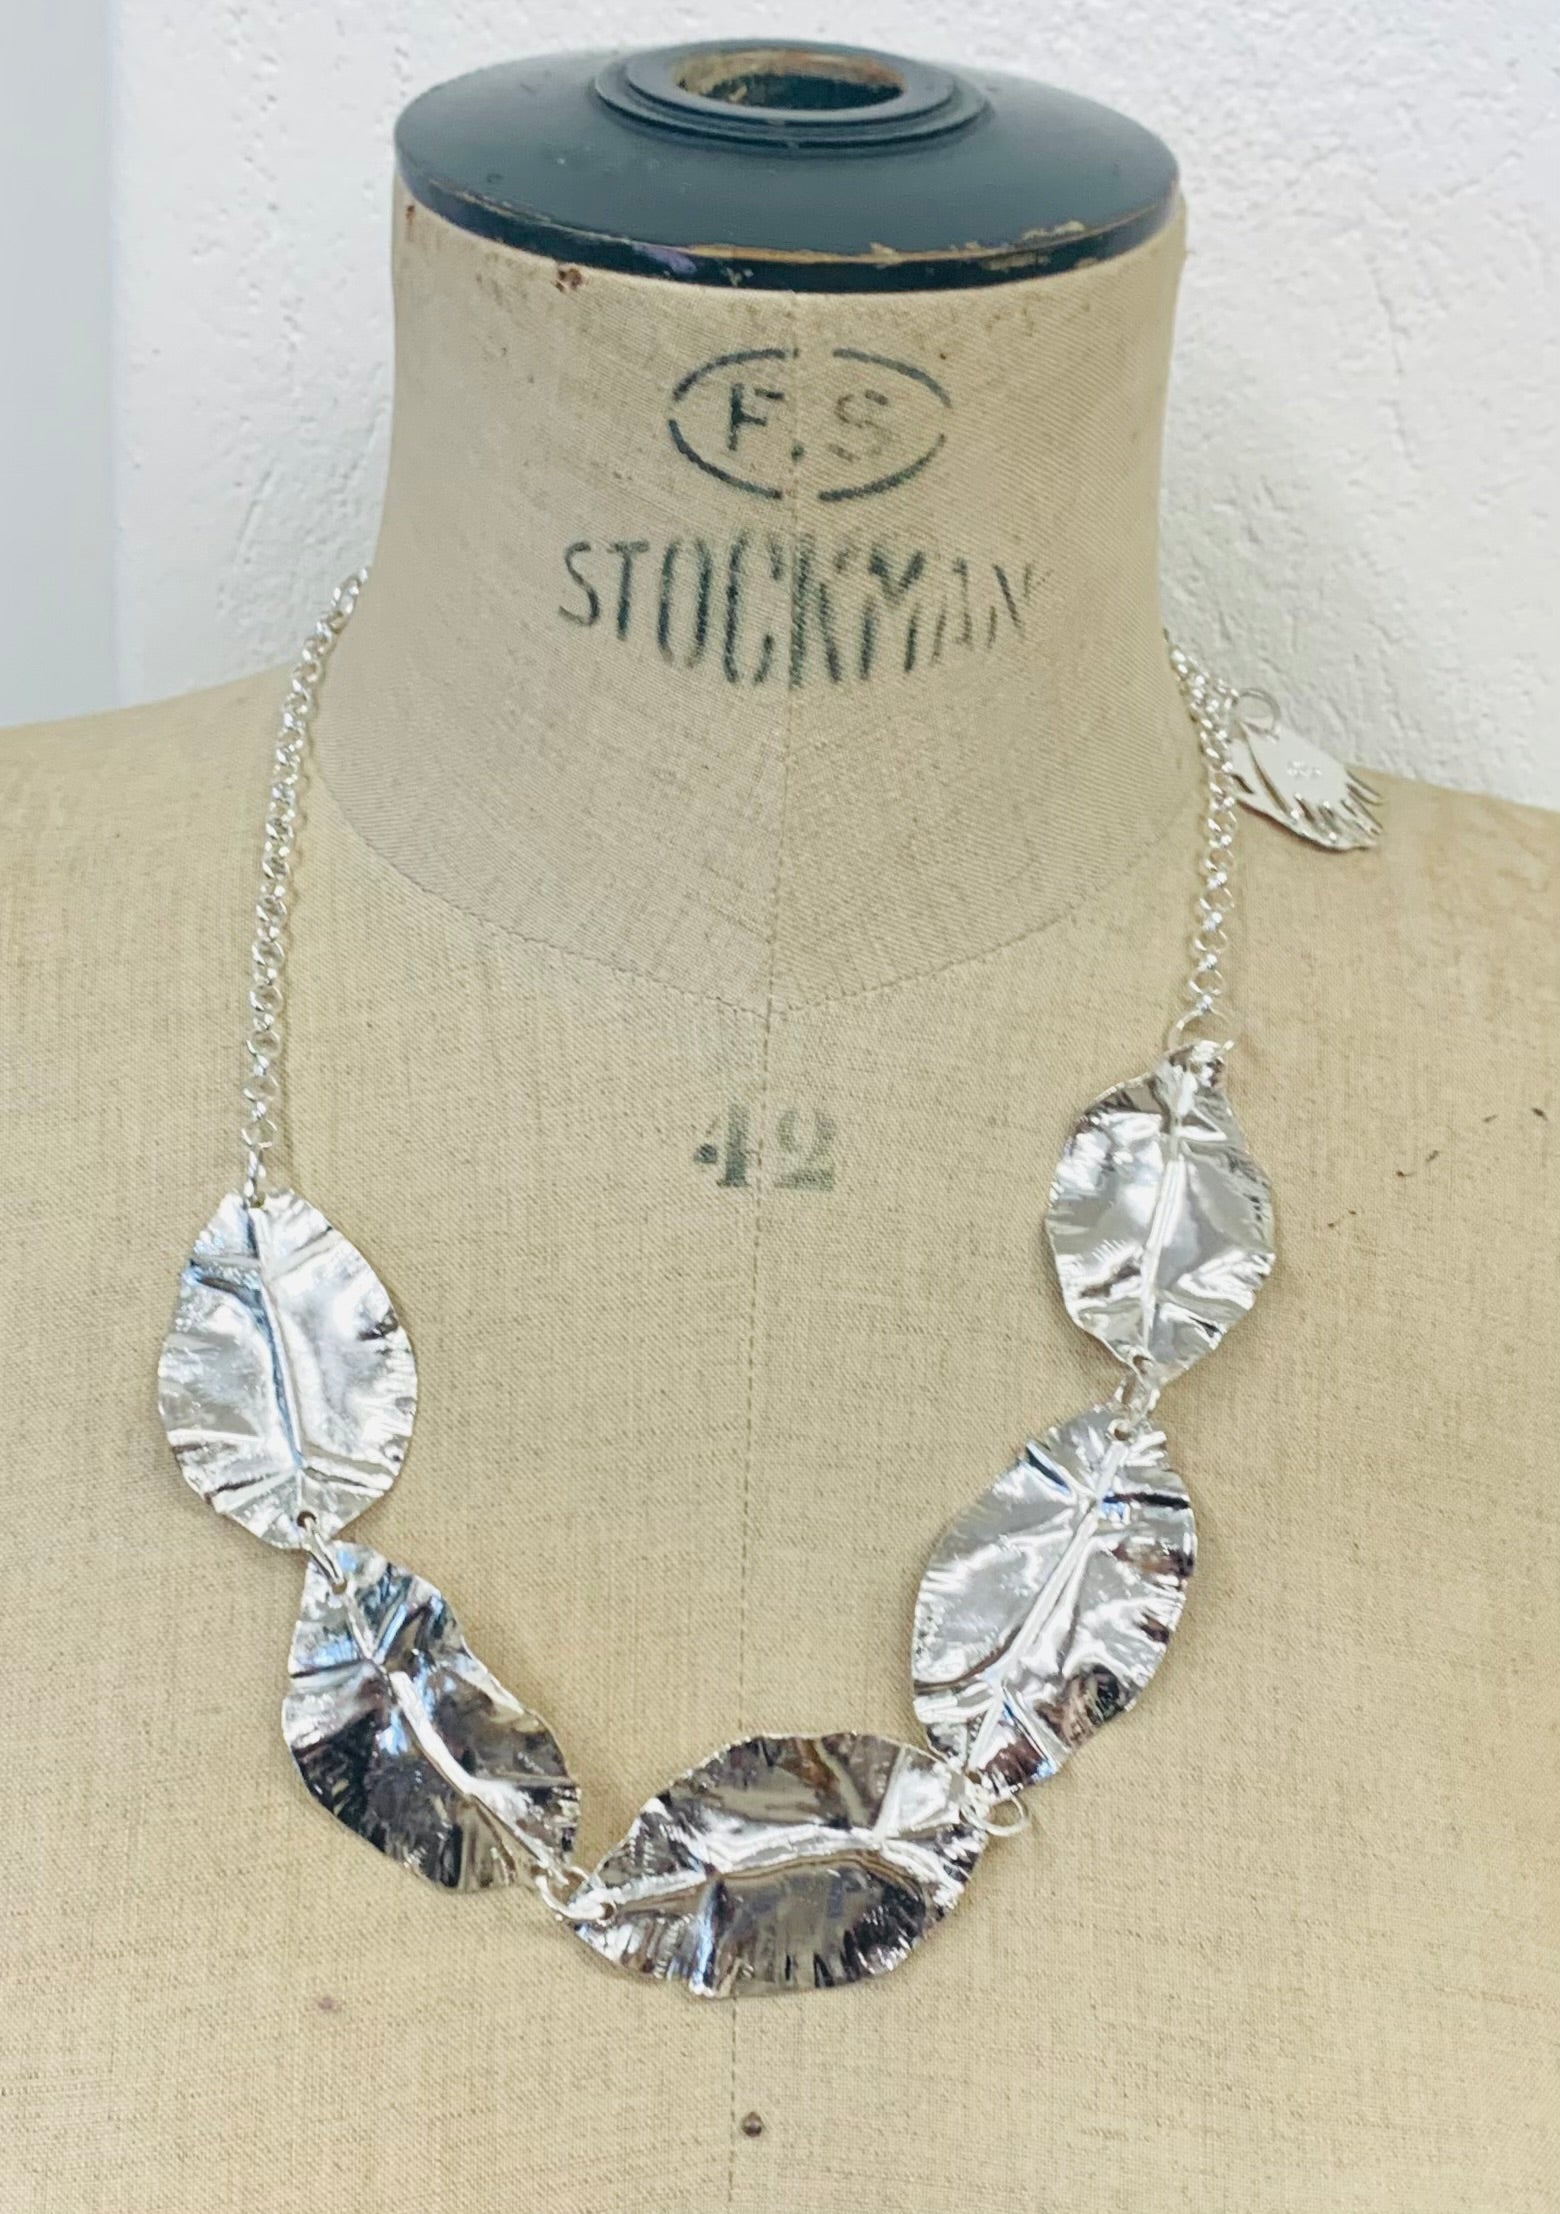 Leaf necklace silver